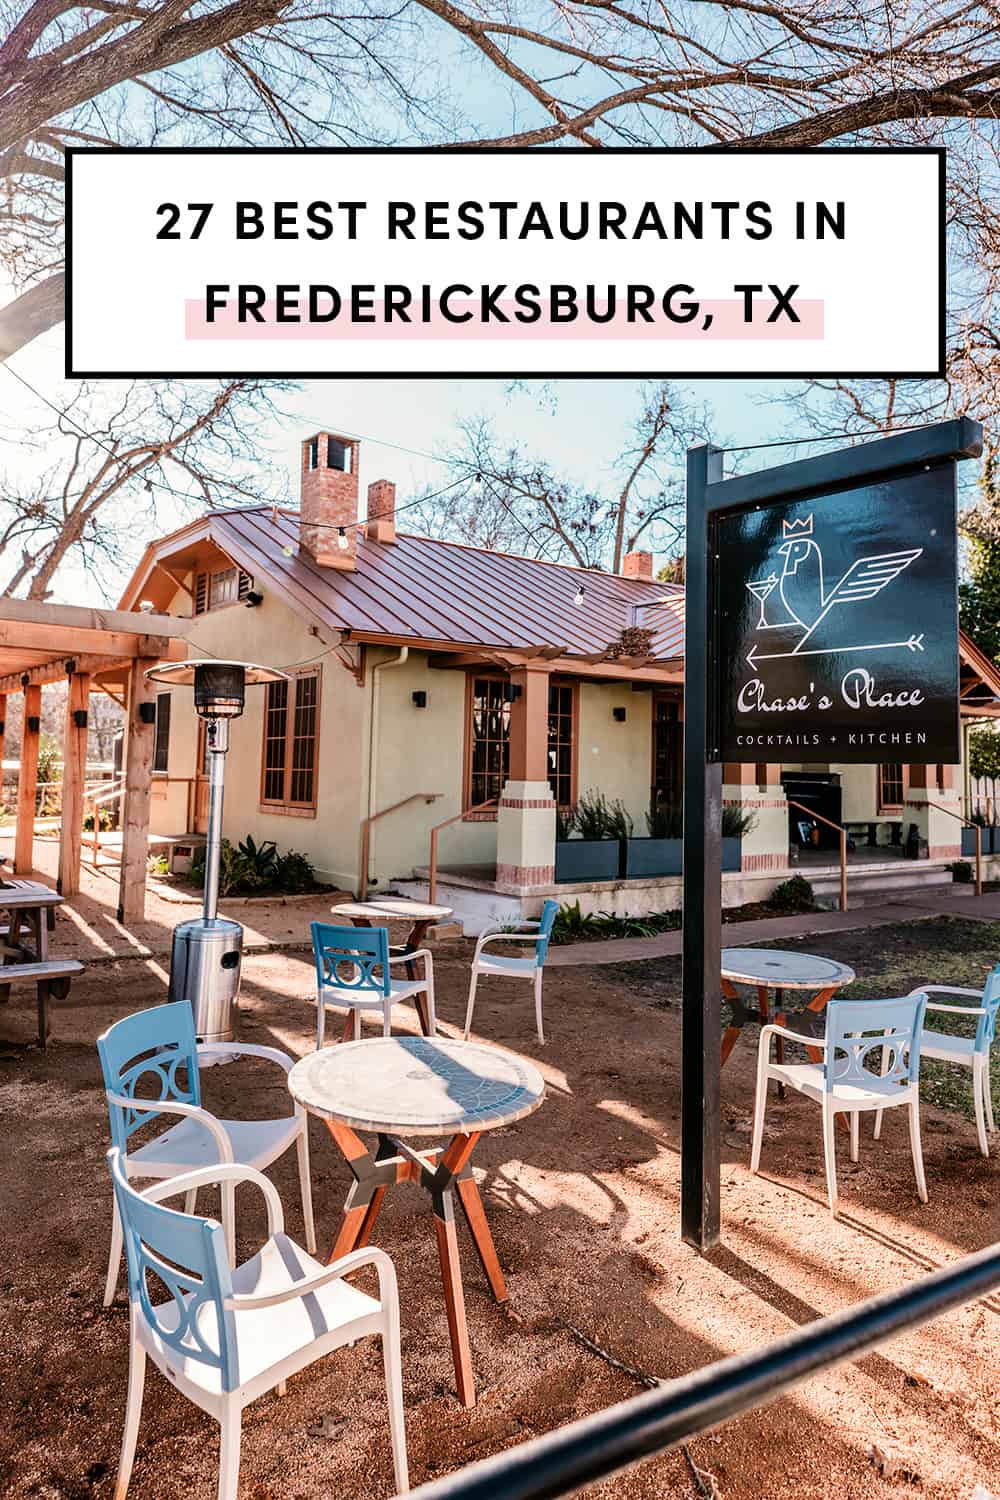 Fredericksburg Restaurants 1 